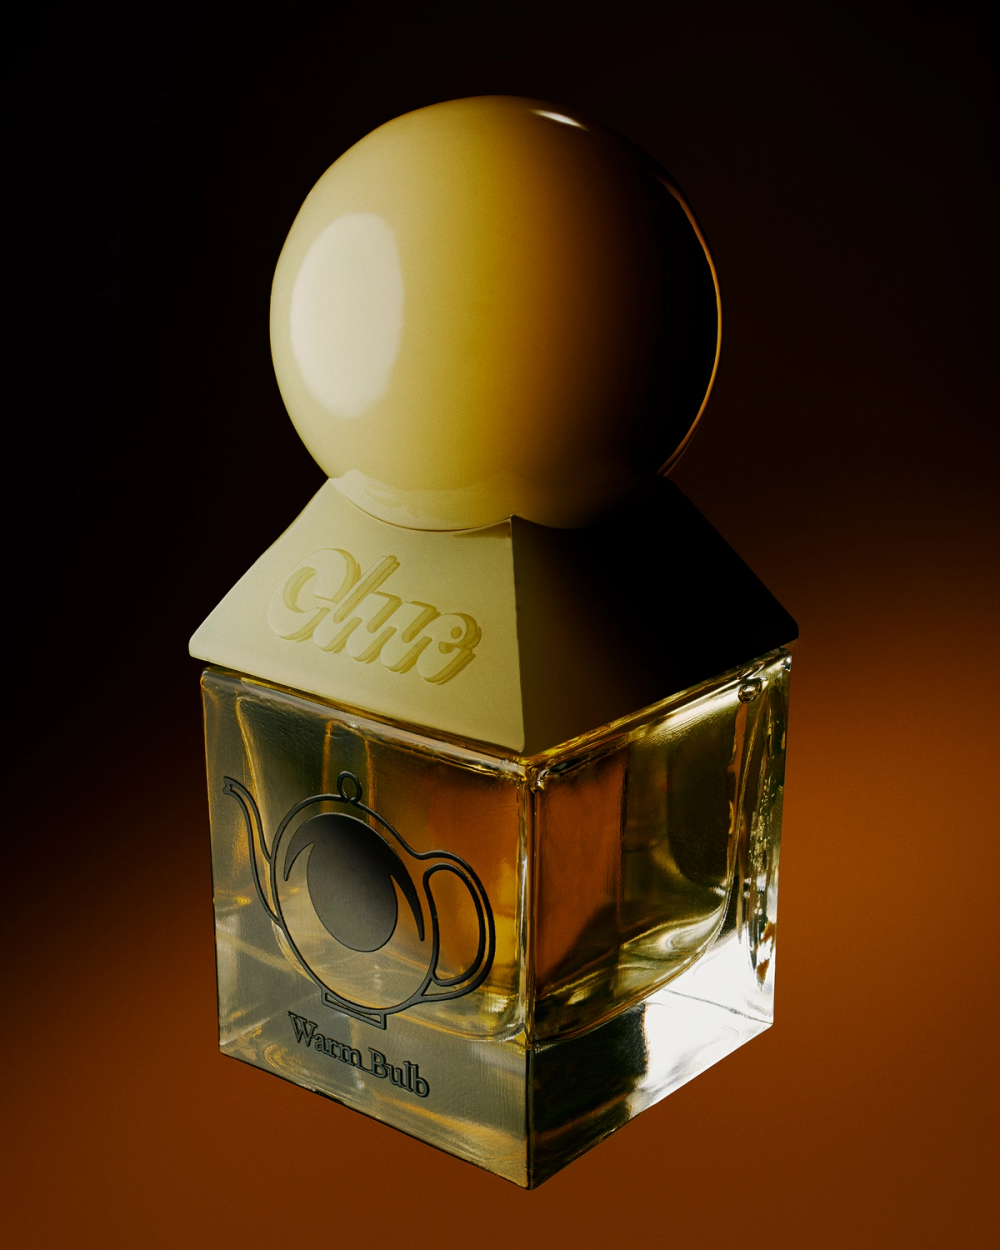 Clue Perfumery